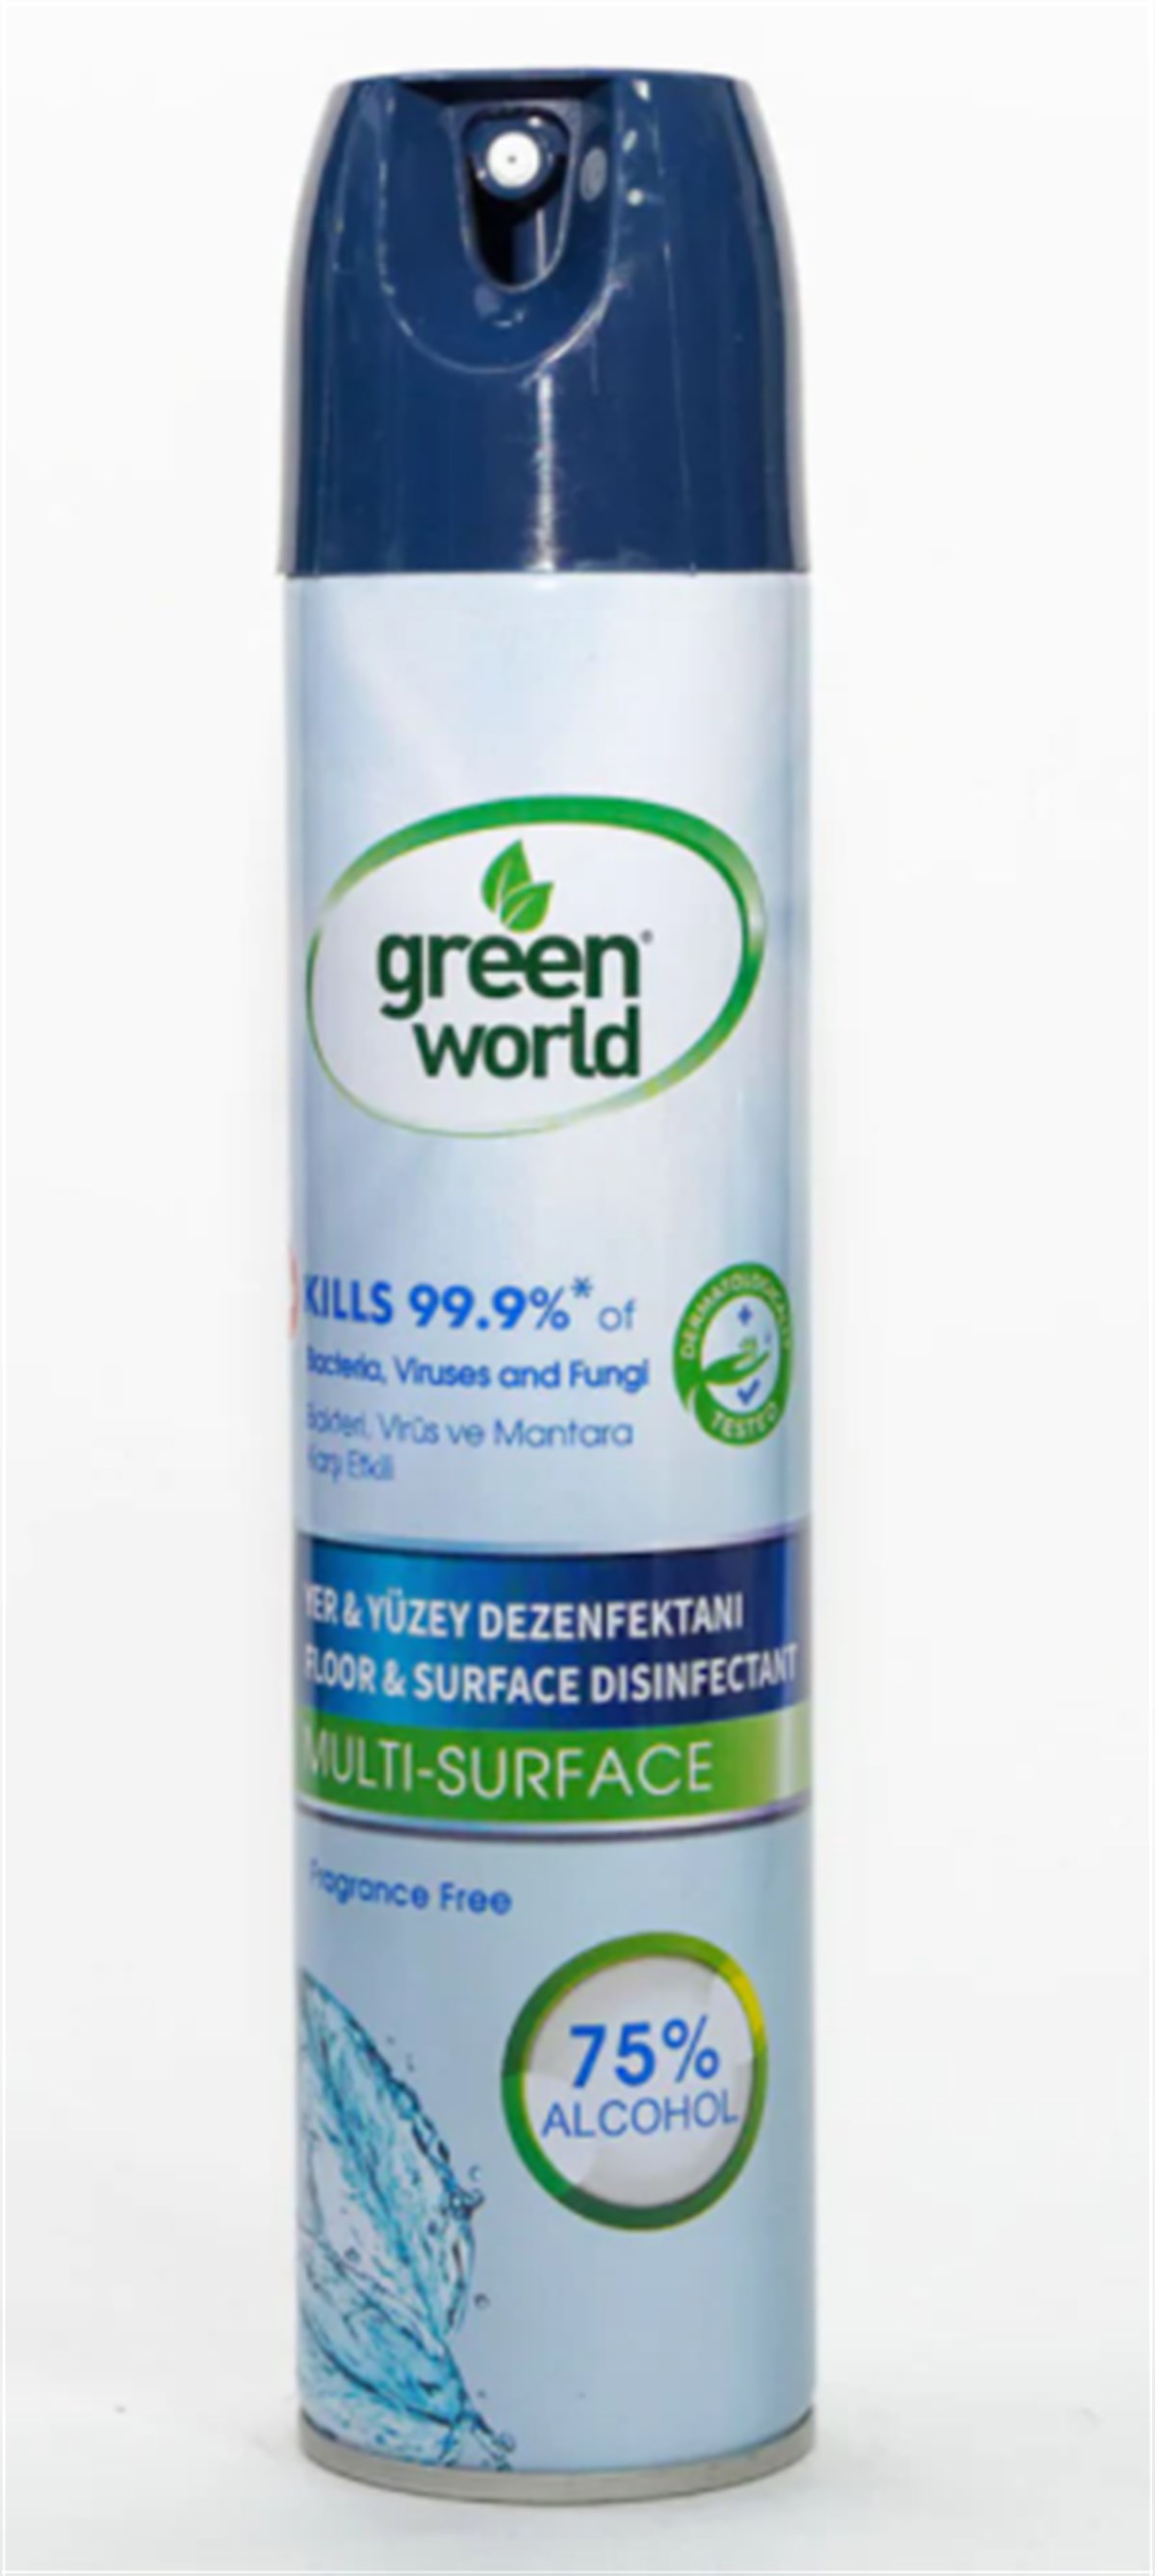 Green World Dezenfektan Yer Yüzey 300 Ml | Cossta Cosmetic Station